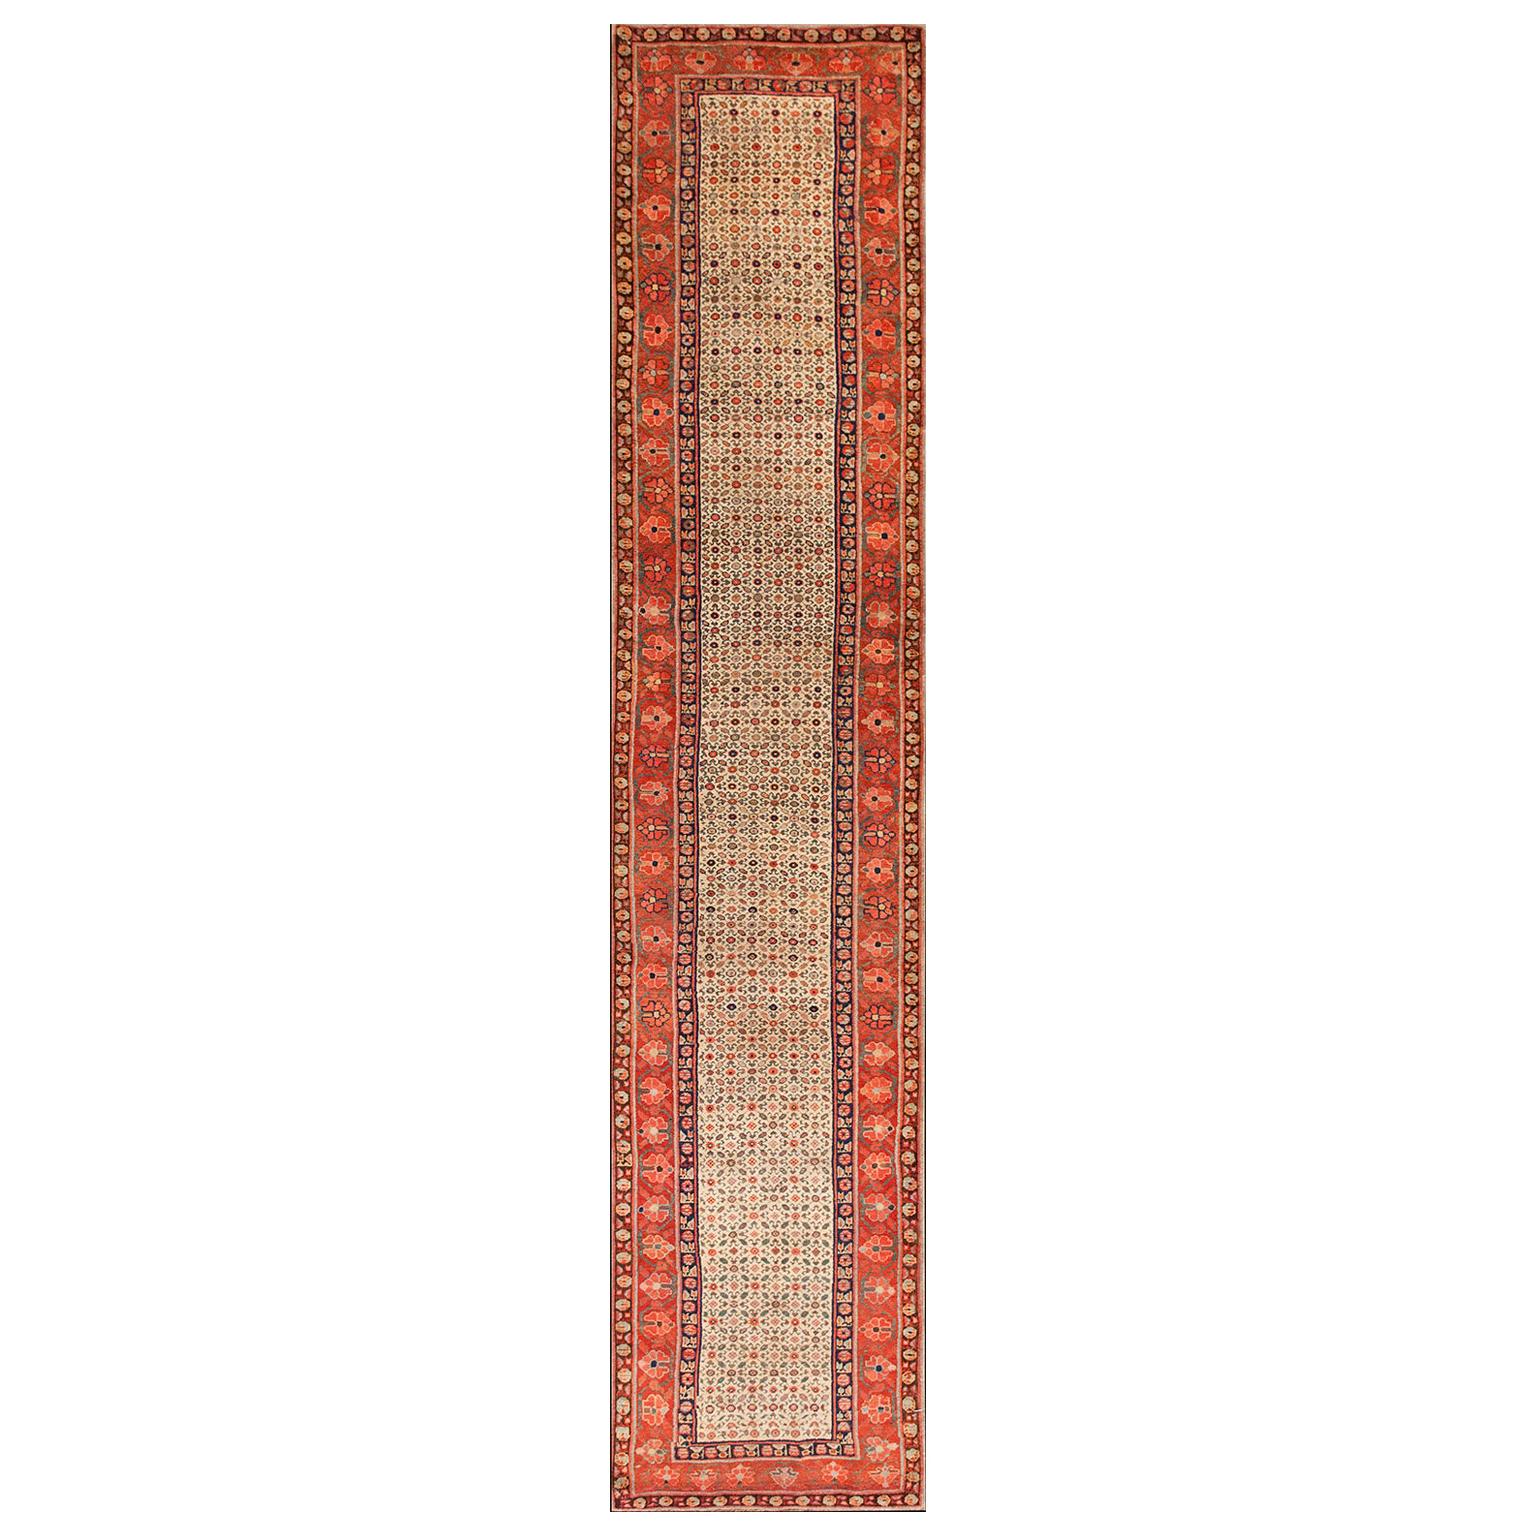 19th Century N.W. Persian Runner Carpet ( 3' x 14'6" - 90 x 442 )